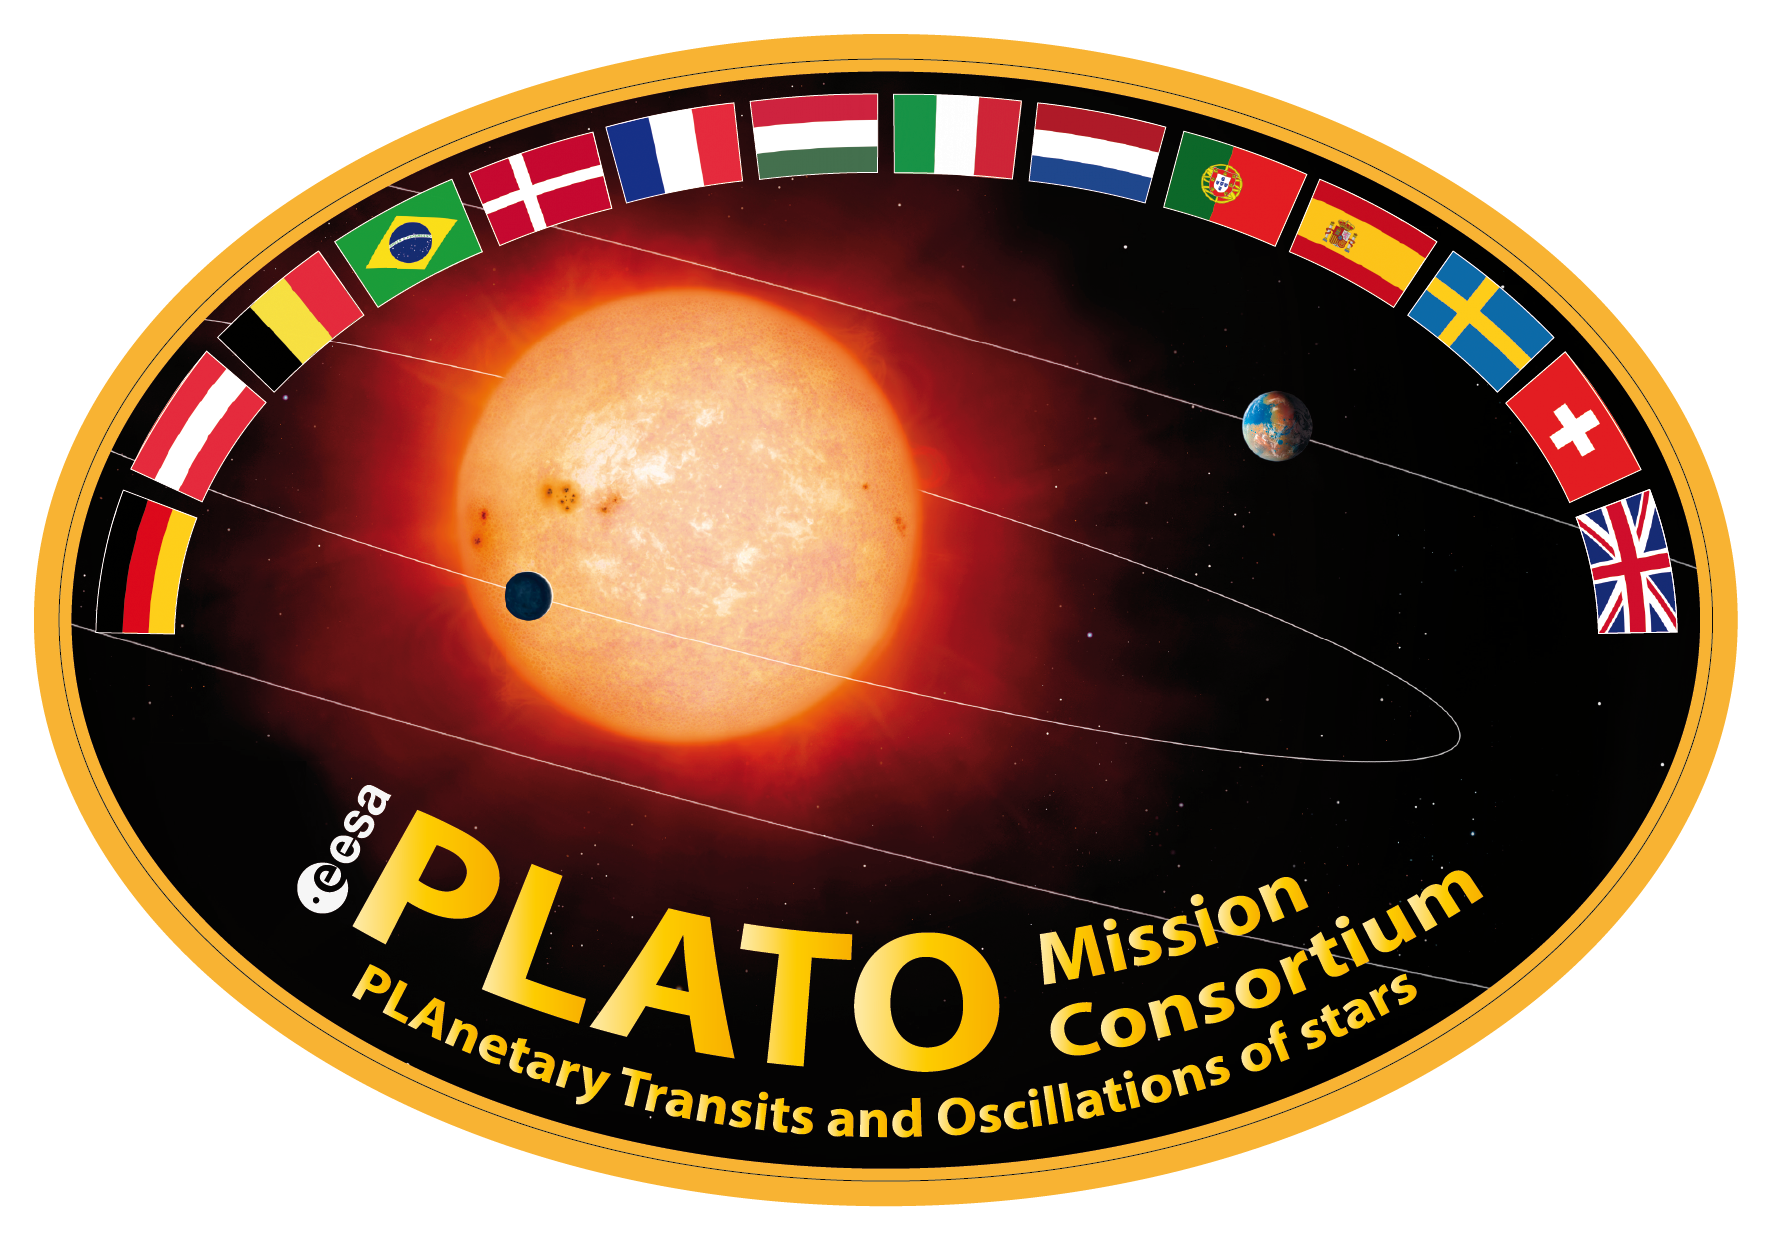 The logo of the PLATO Mission Consortium